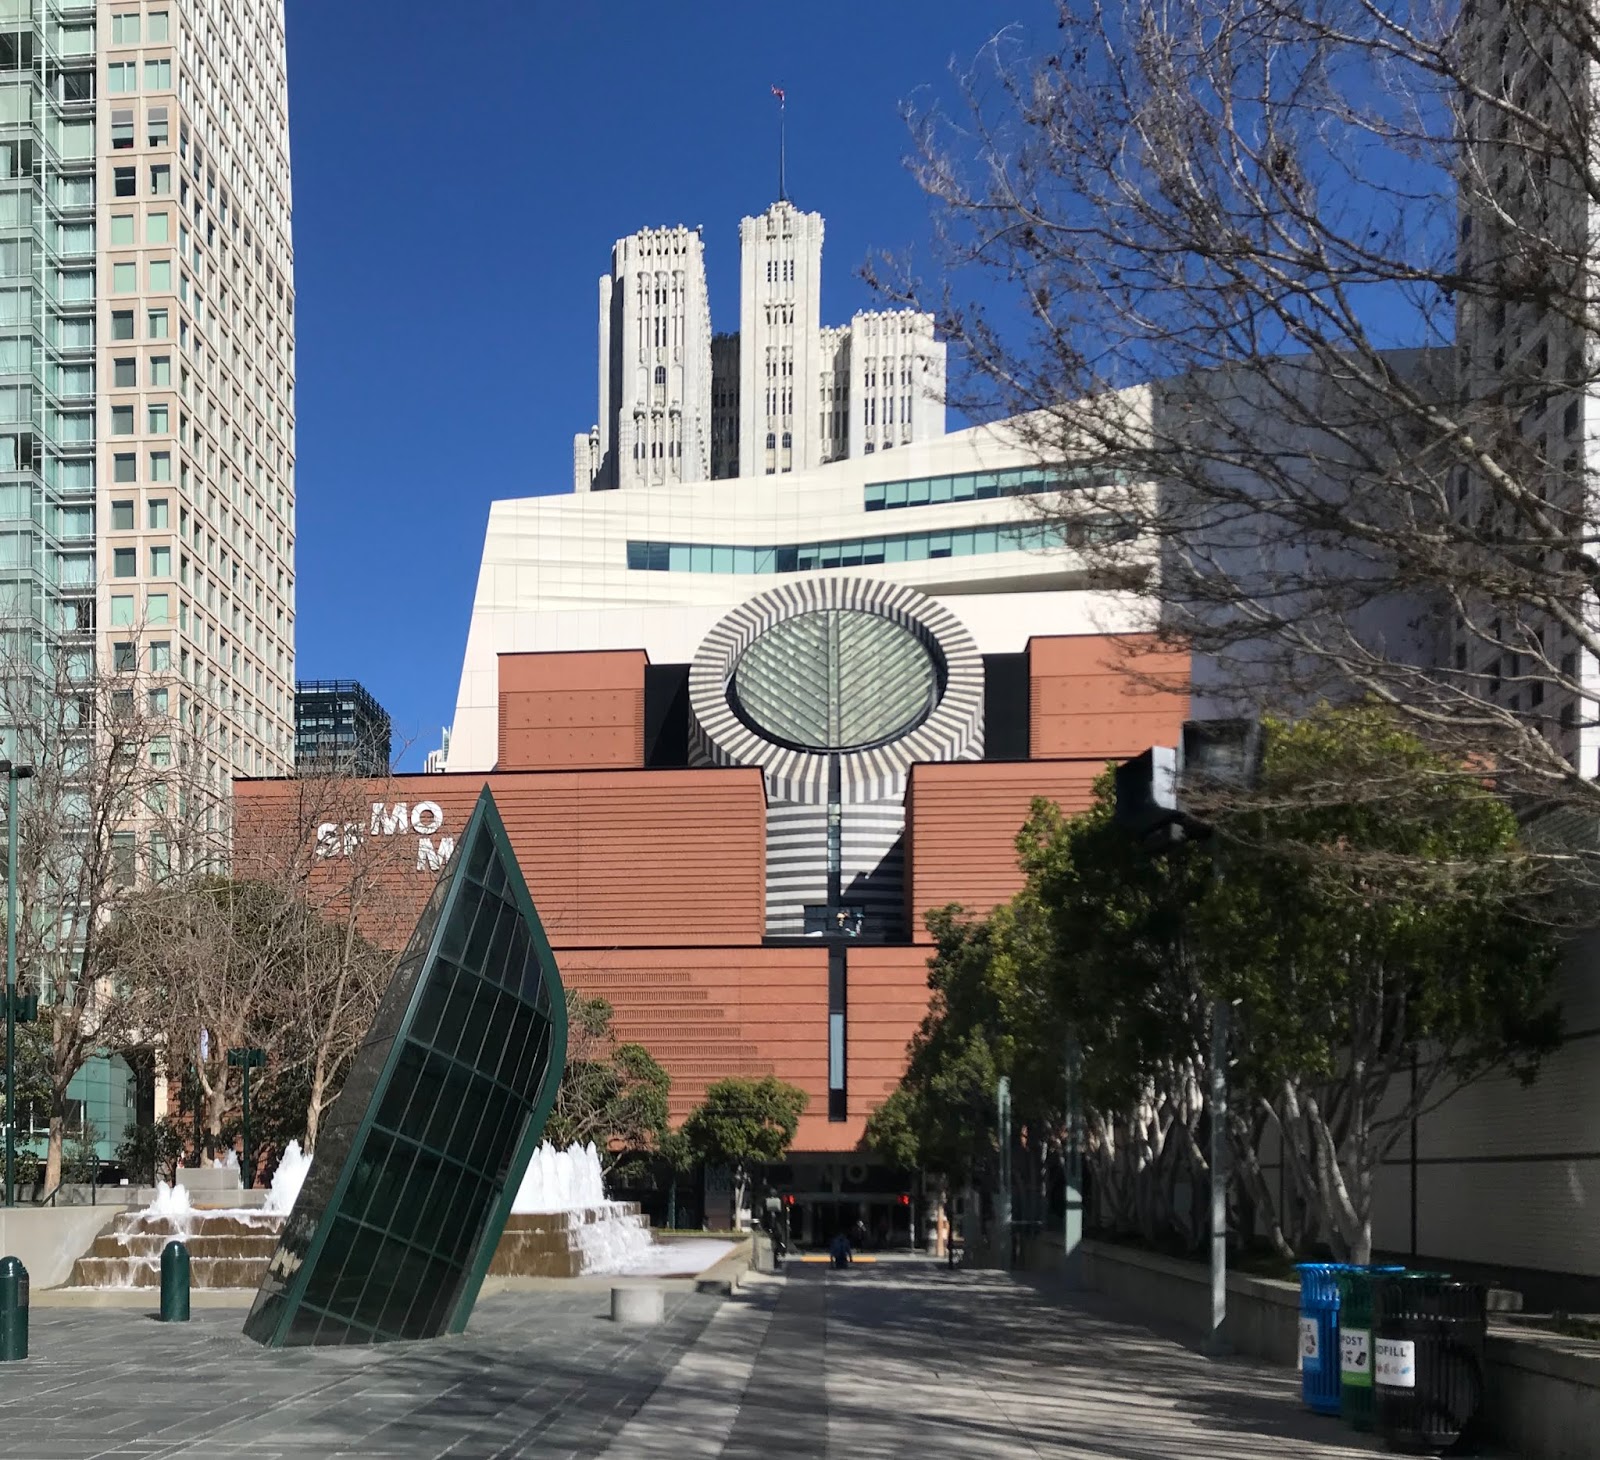 San Fransisco Museum of Modern Art Exhibit Review